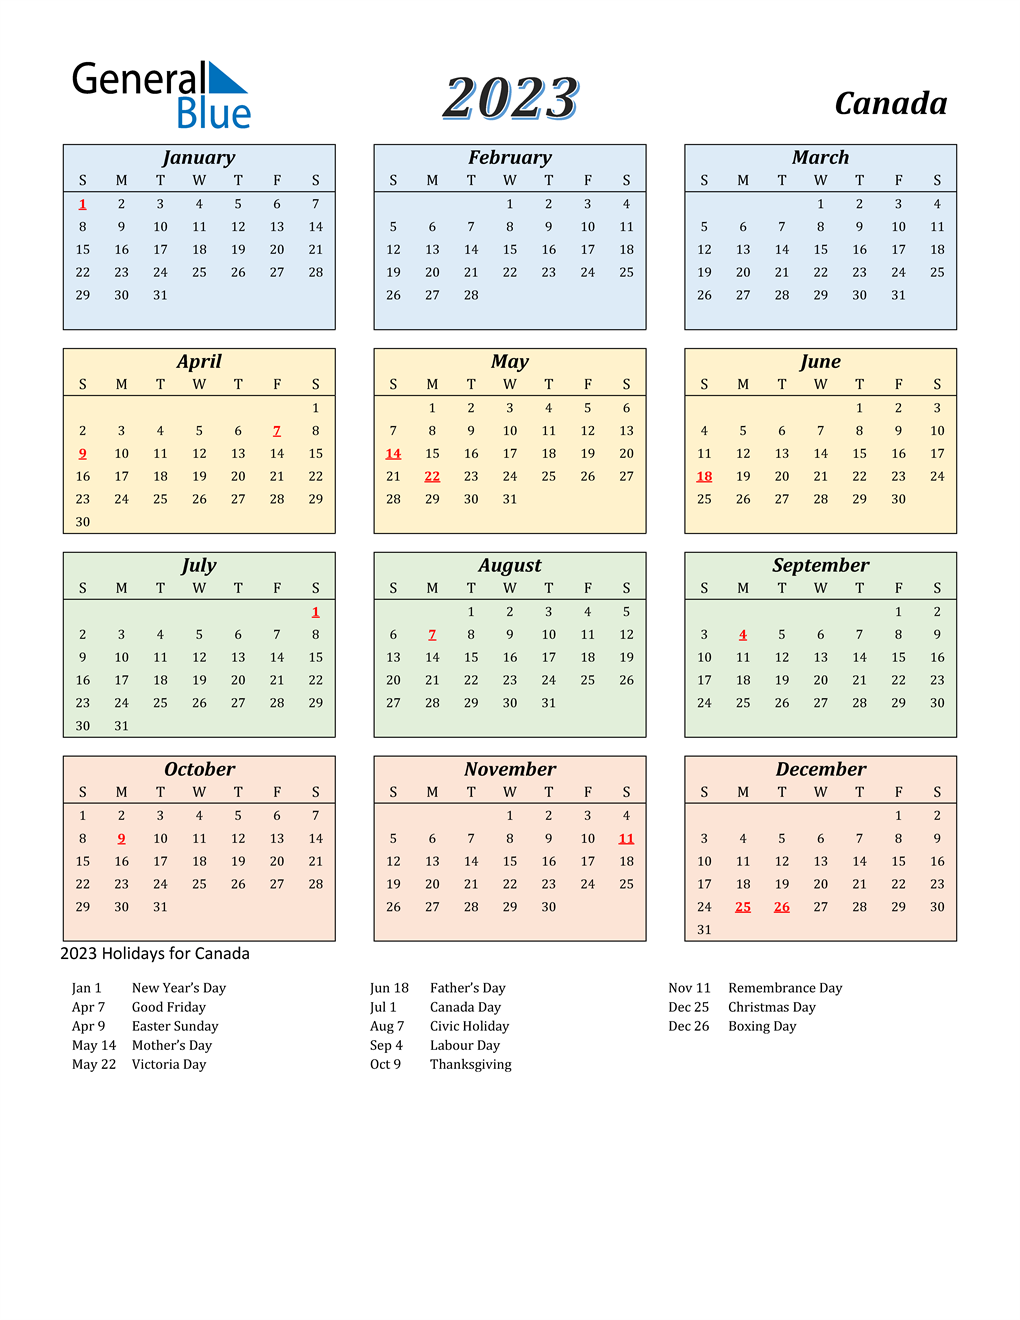 2023 Calendar Printable With Holidays 2023